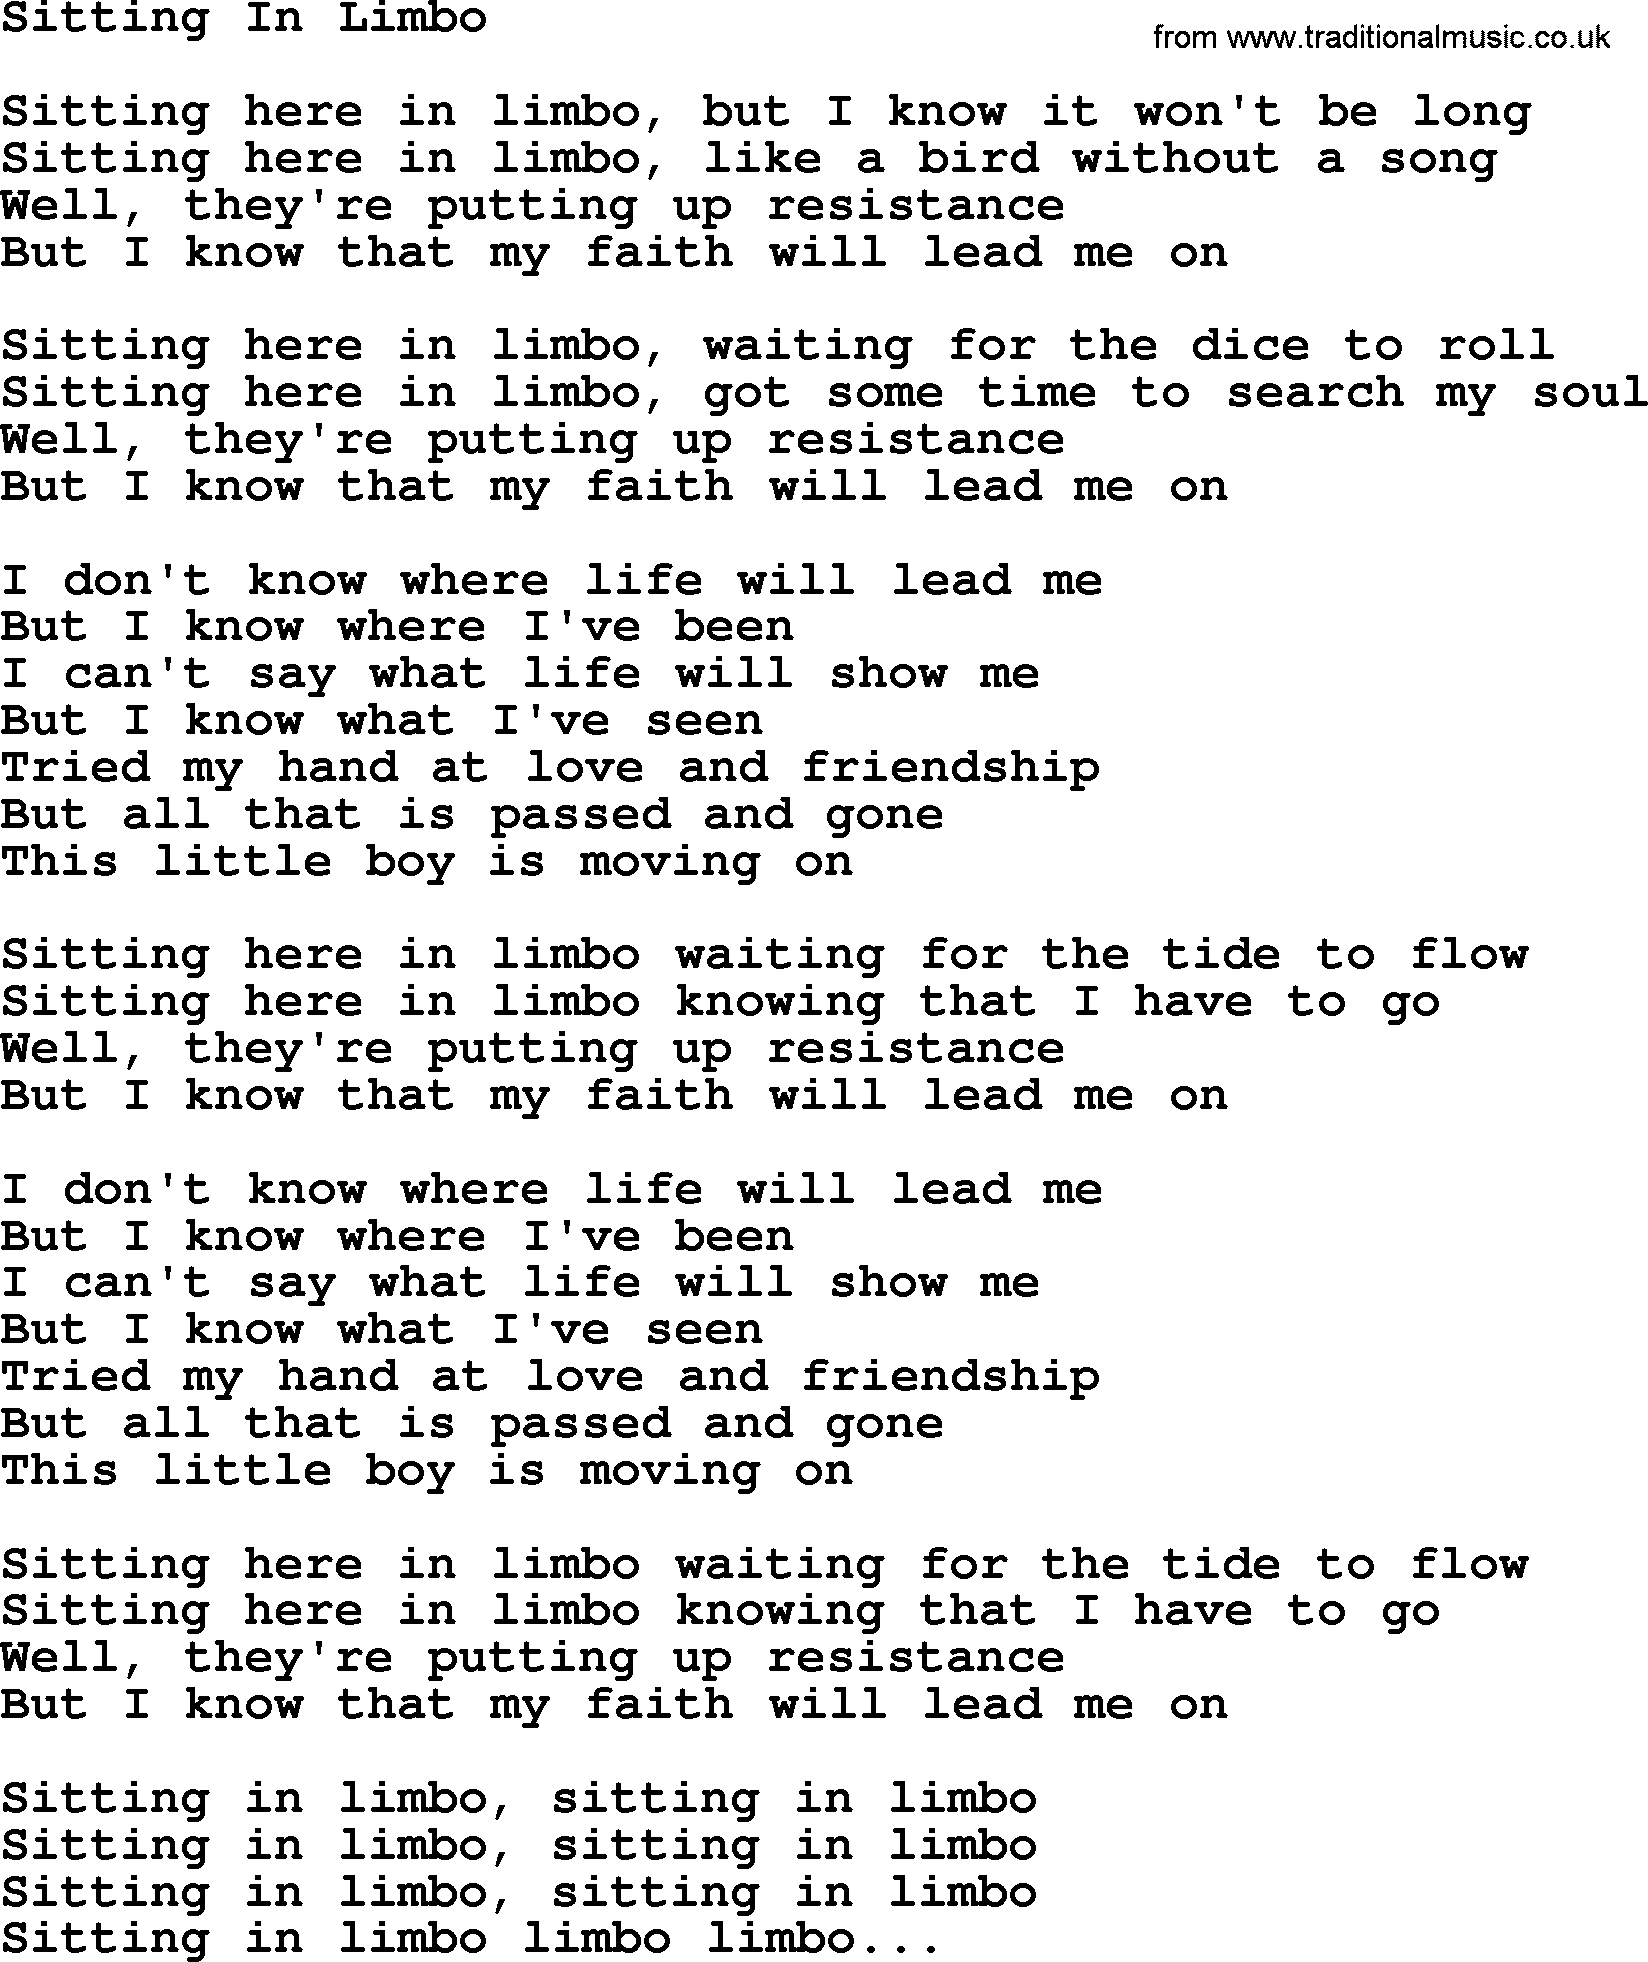 Willie Nelson song: Sitting In Limbo lyrics